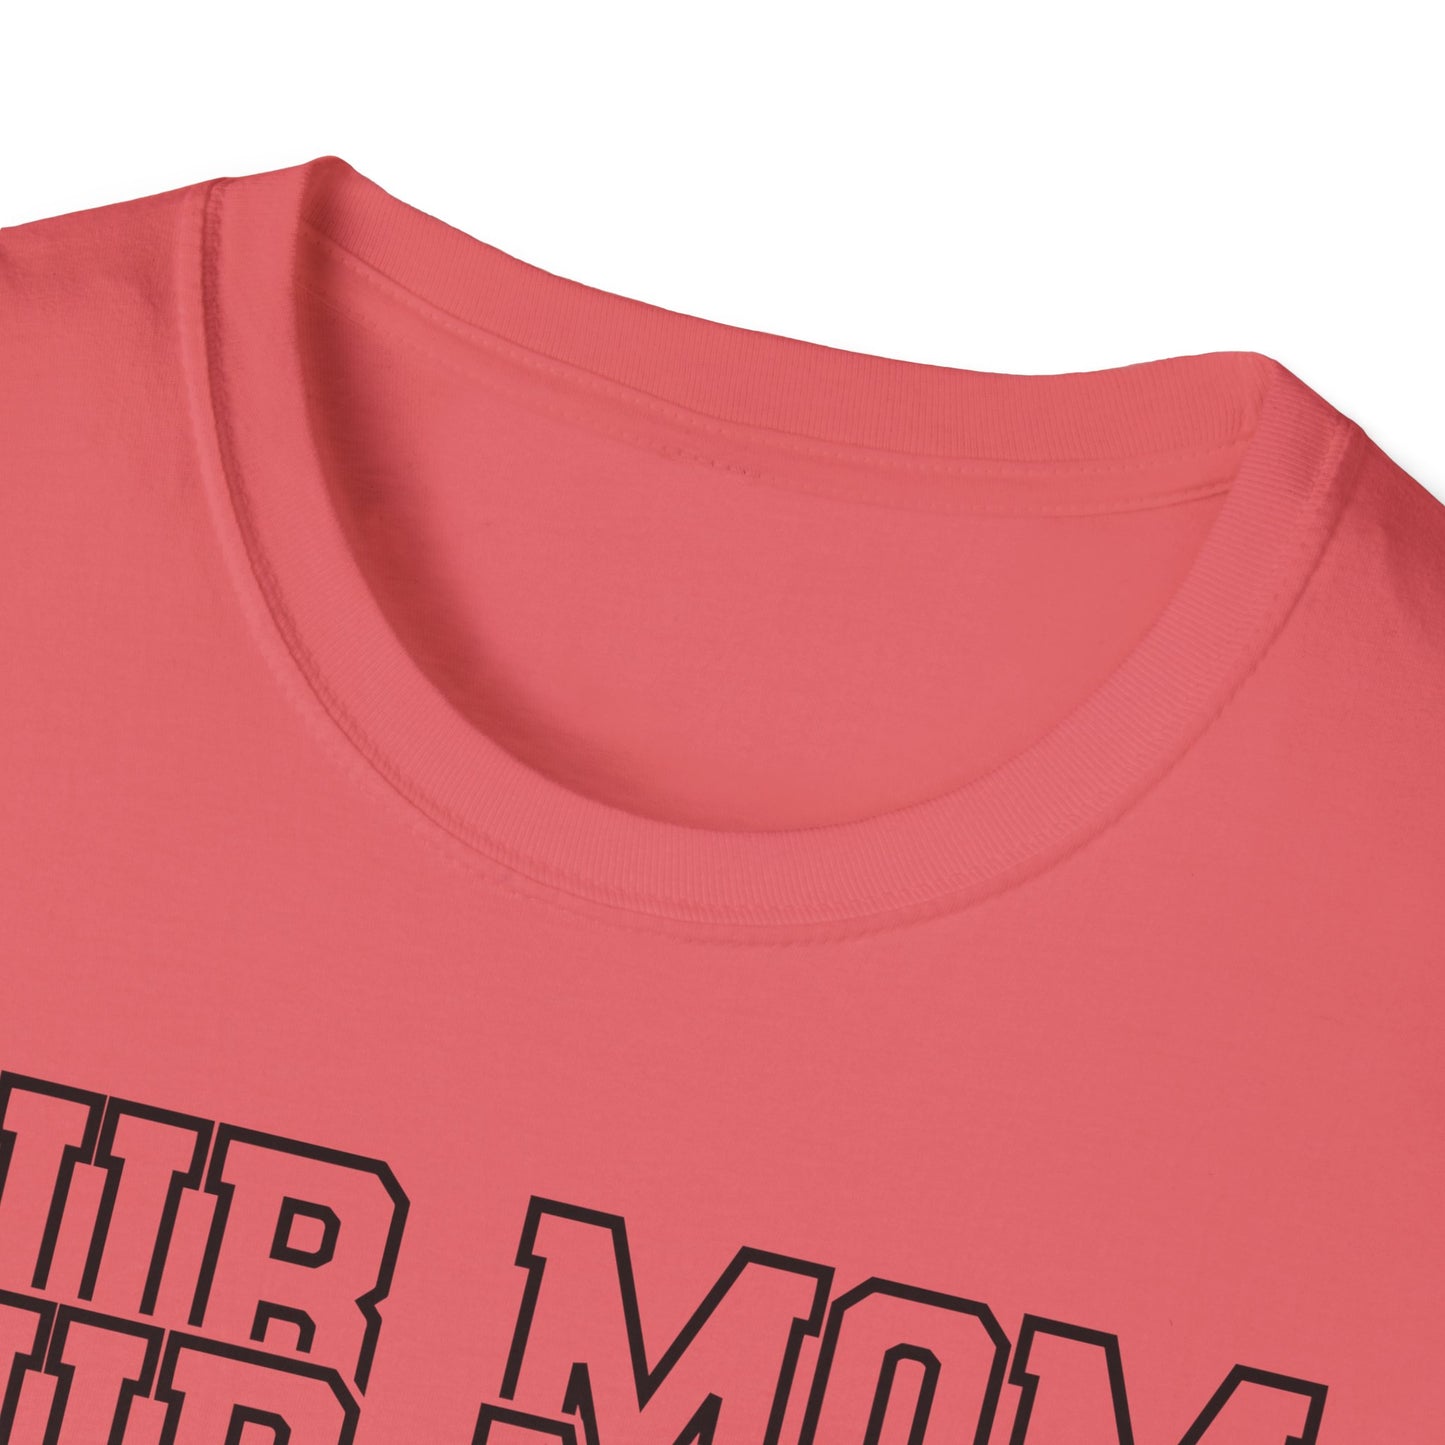 Fur MOM - Unisex Softstyle T-Shirt